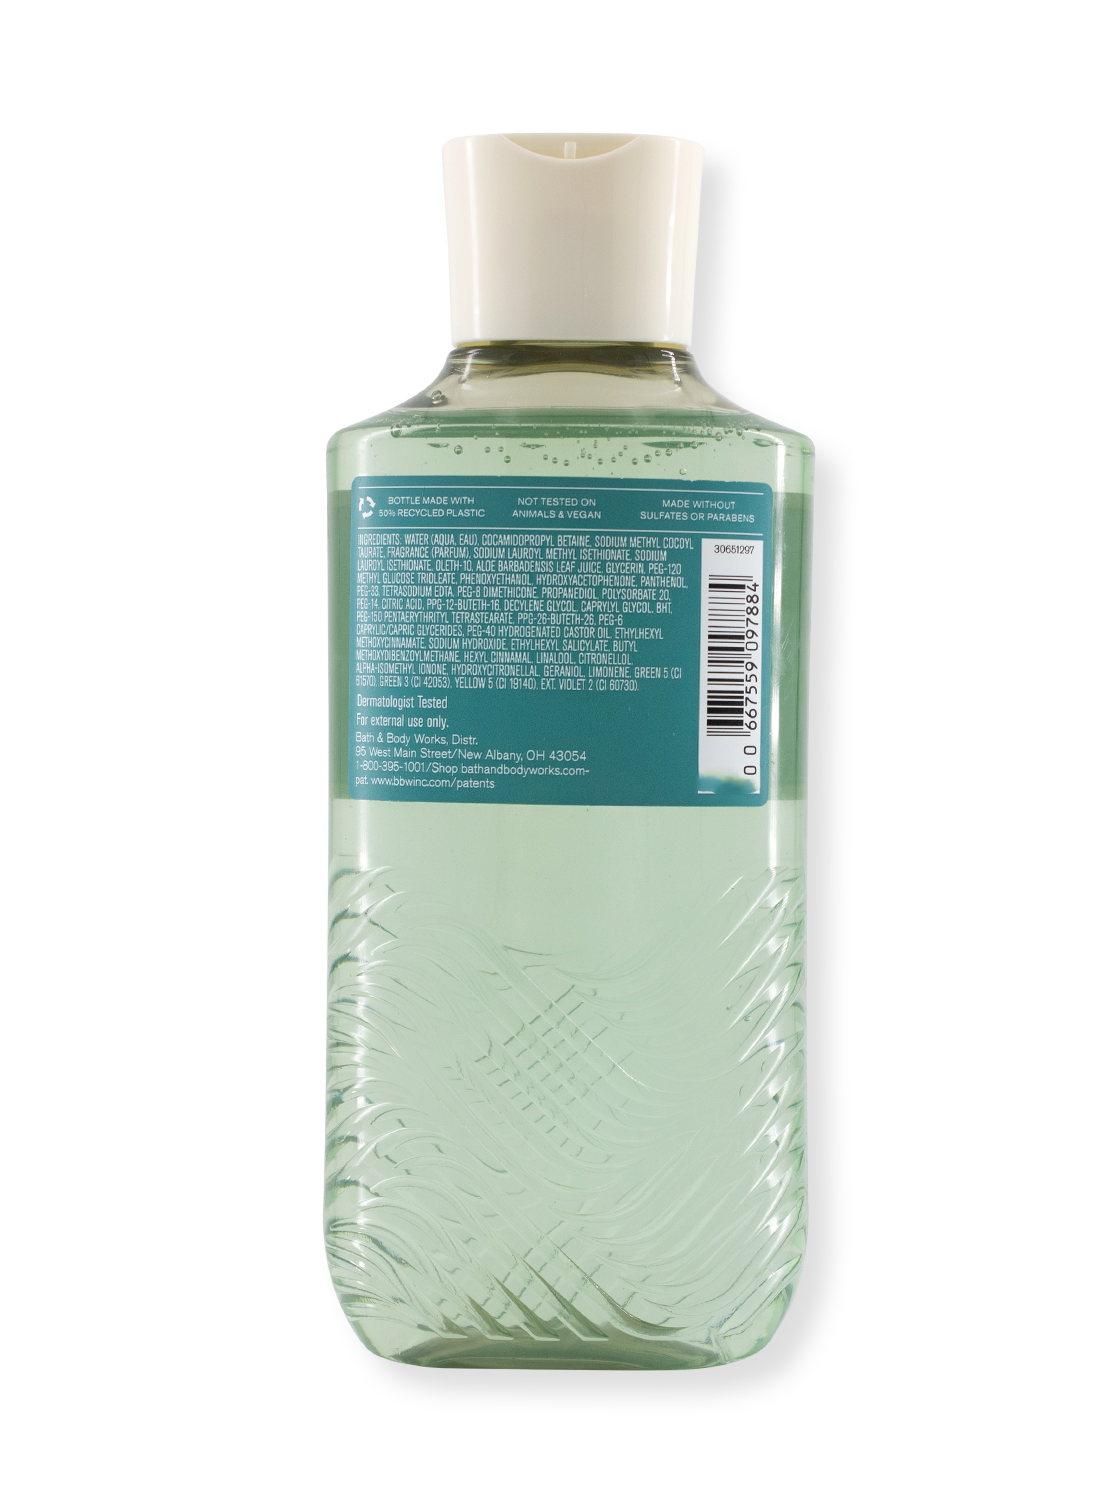 Douchegel/bodywash - Water Lily Springs - 295 ml